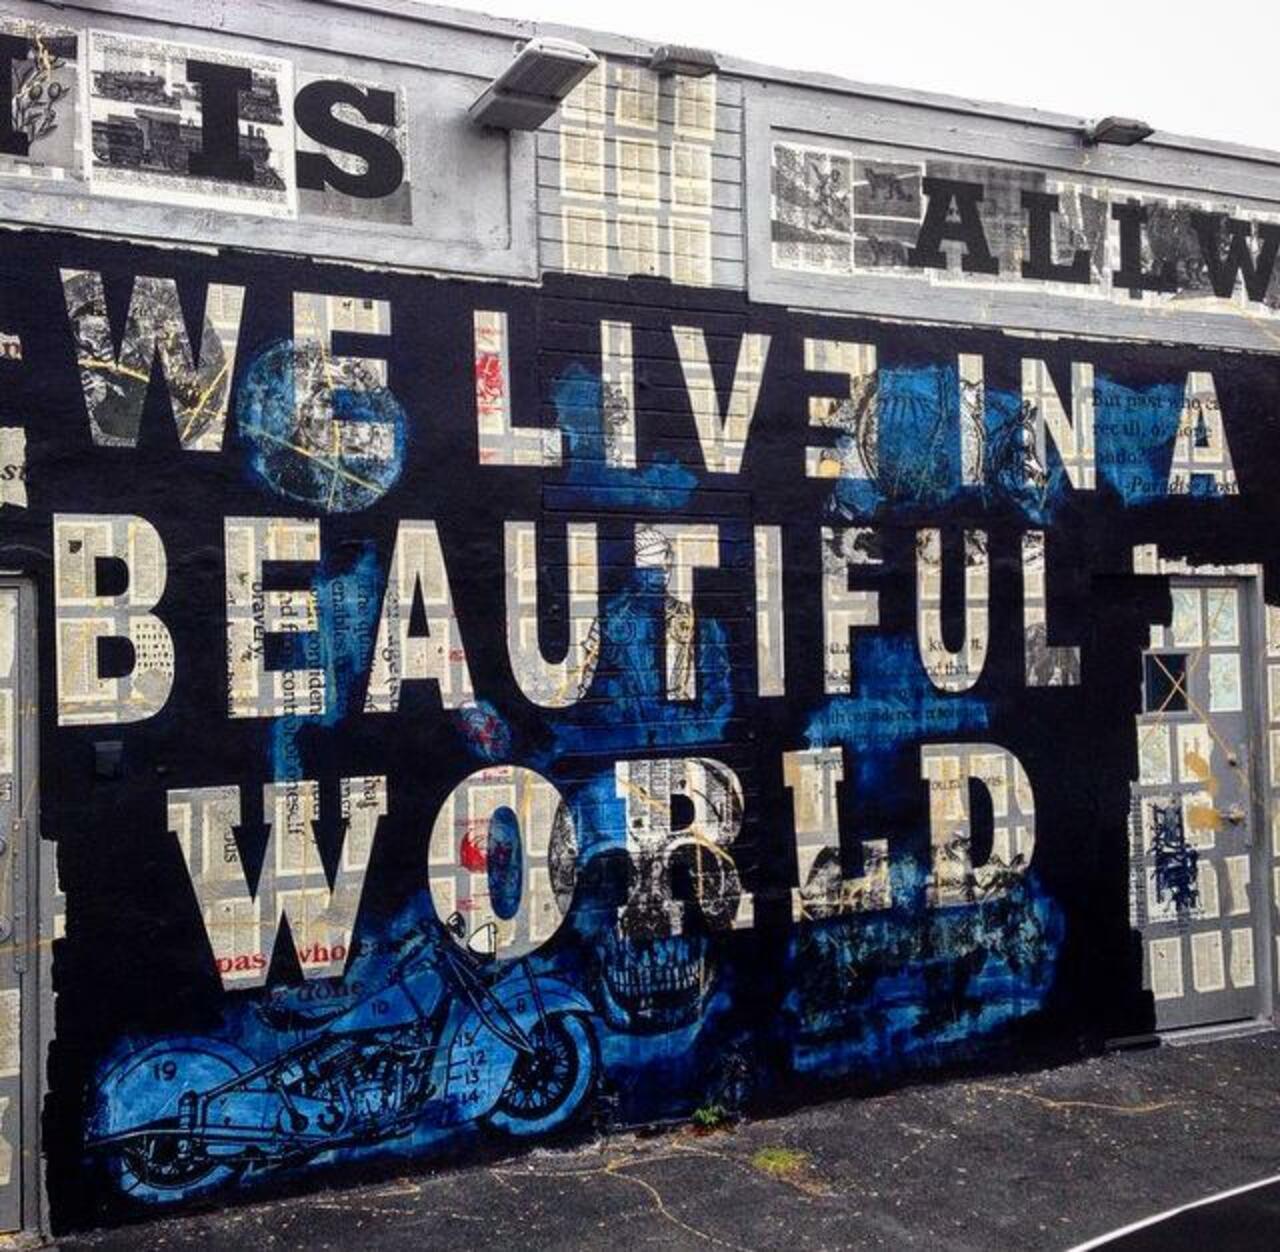 RT @GoogleStreetArt: We live in a beautiful world... 

Street Art by Peter Tunney 
#art #arte #graffiti #streetart http://t.co/SWL3gWd5f2